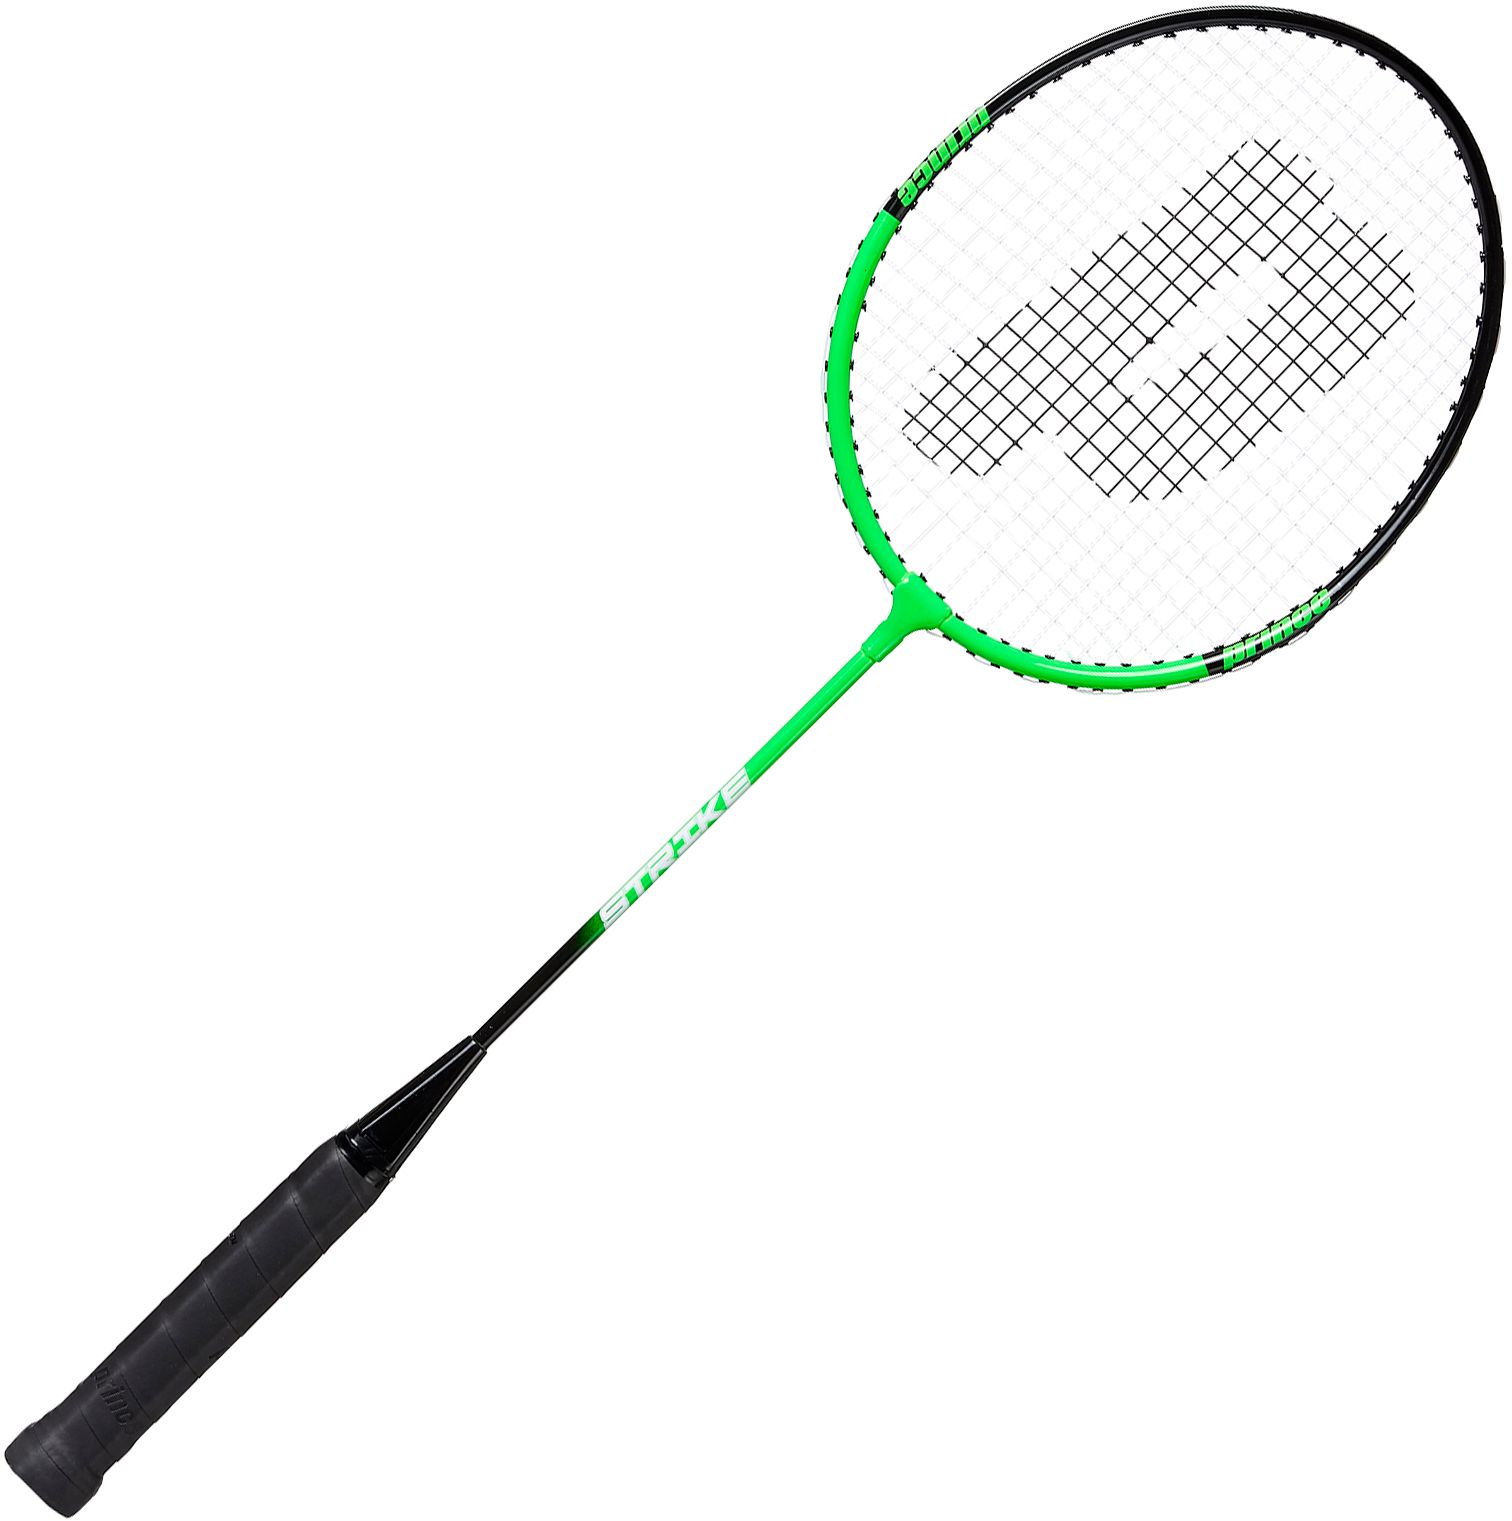 about badminton racket